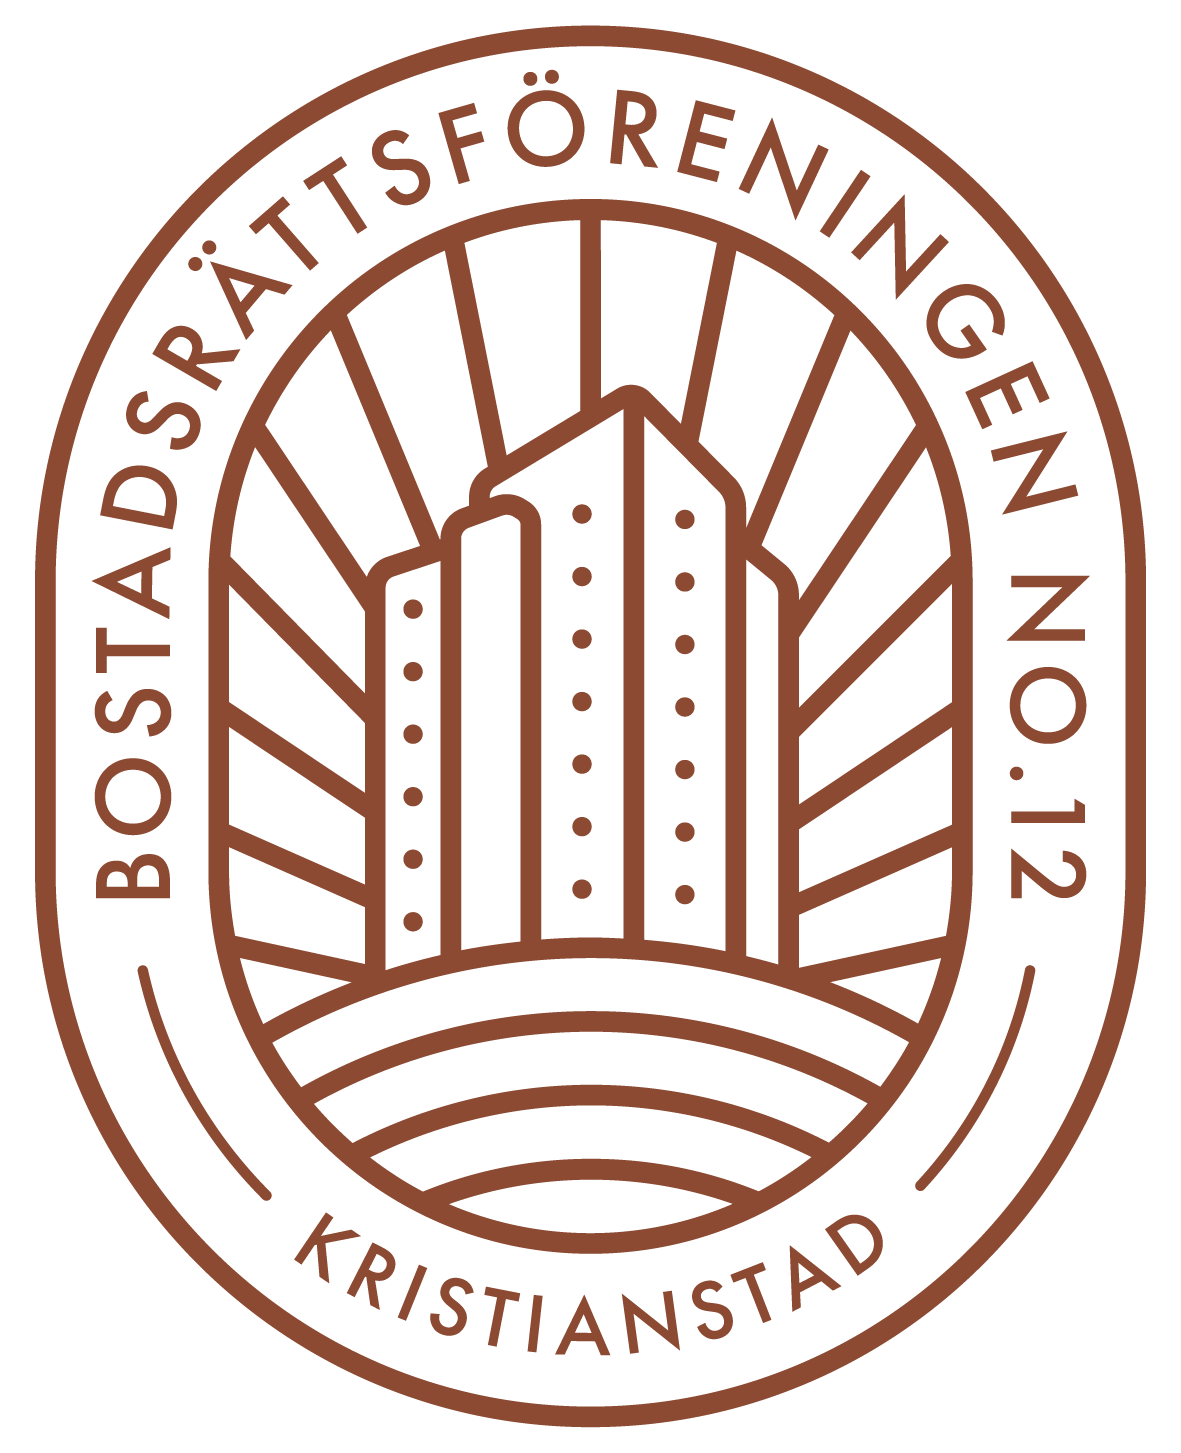 Brf No.12 i Kristianstad